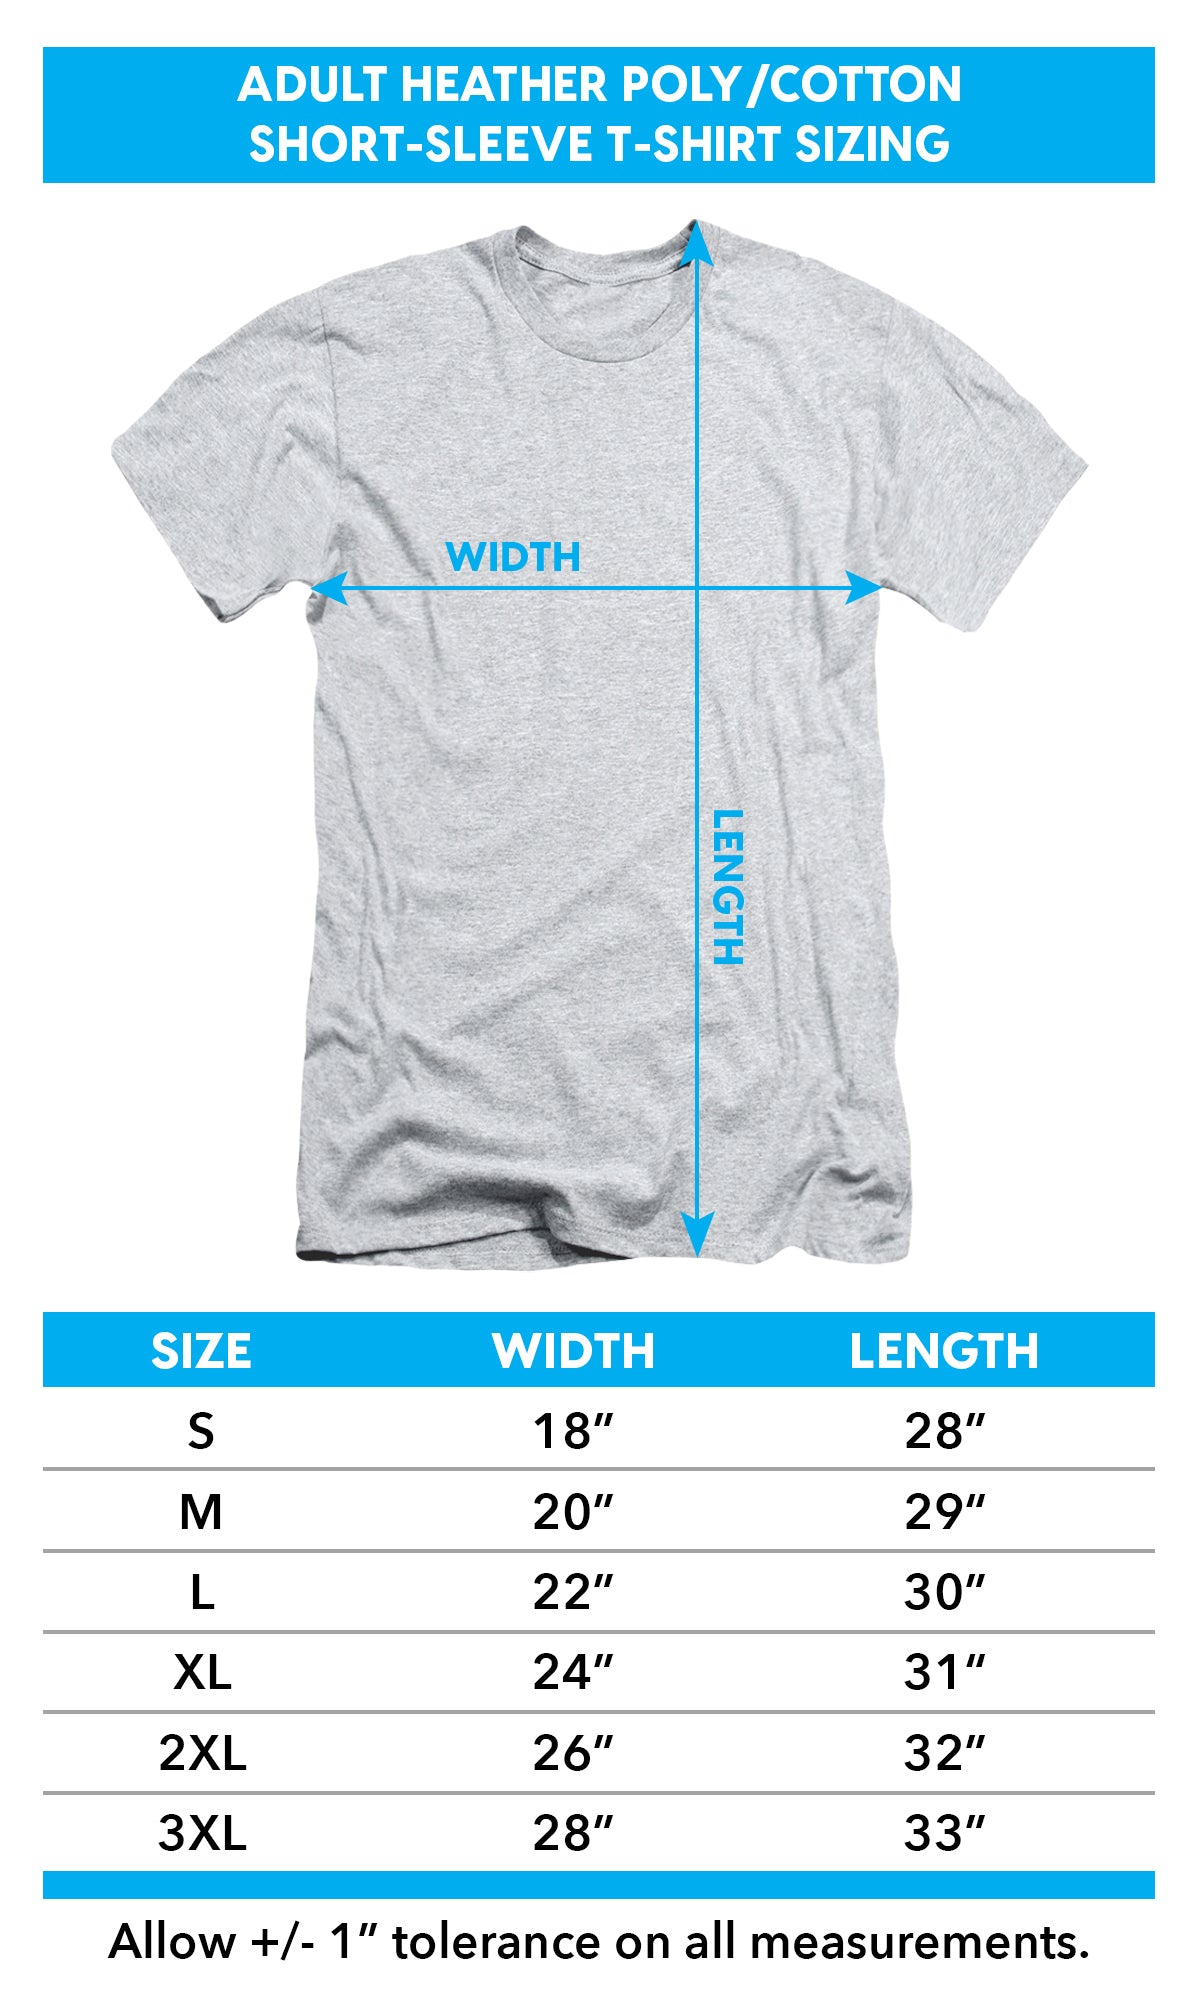 Star Trek Captain Sisko Adult Size Heather Style T-Shirt.